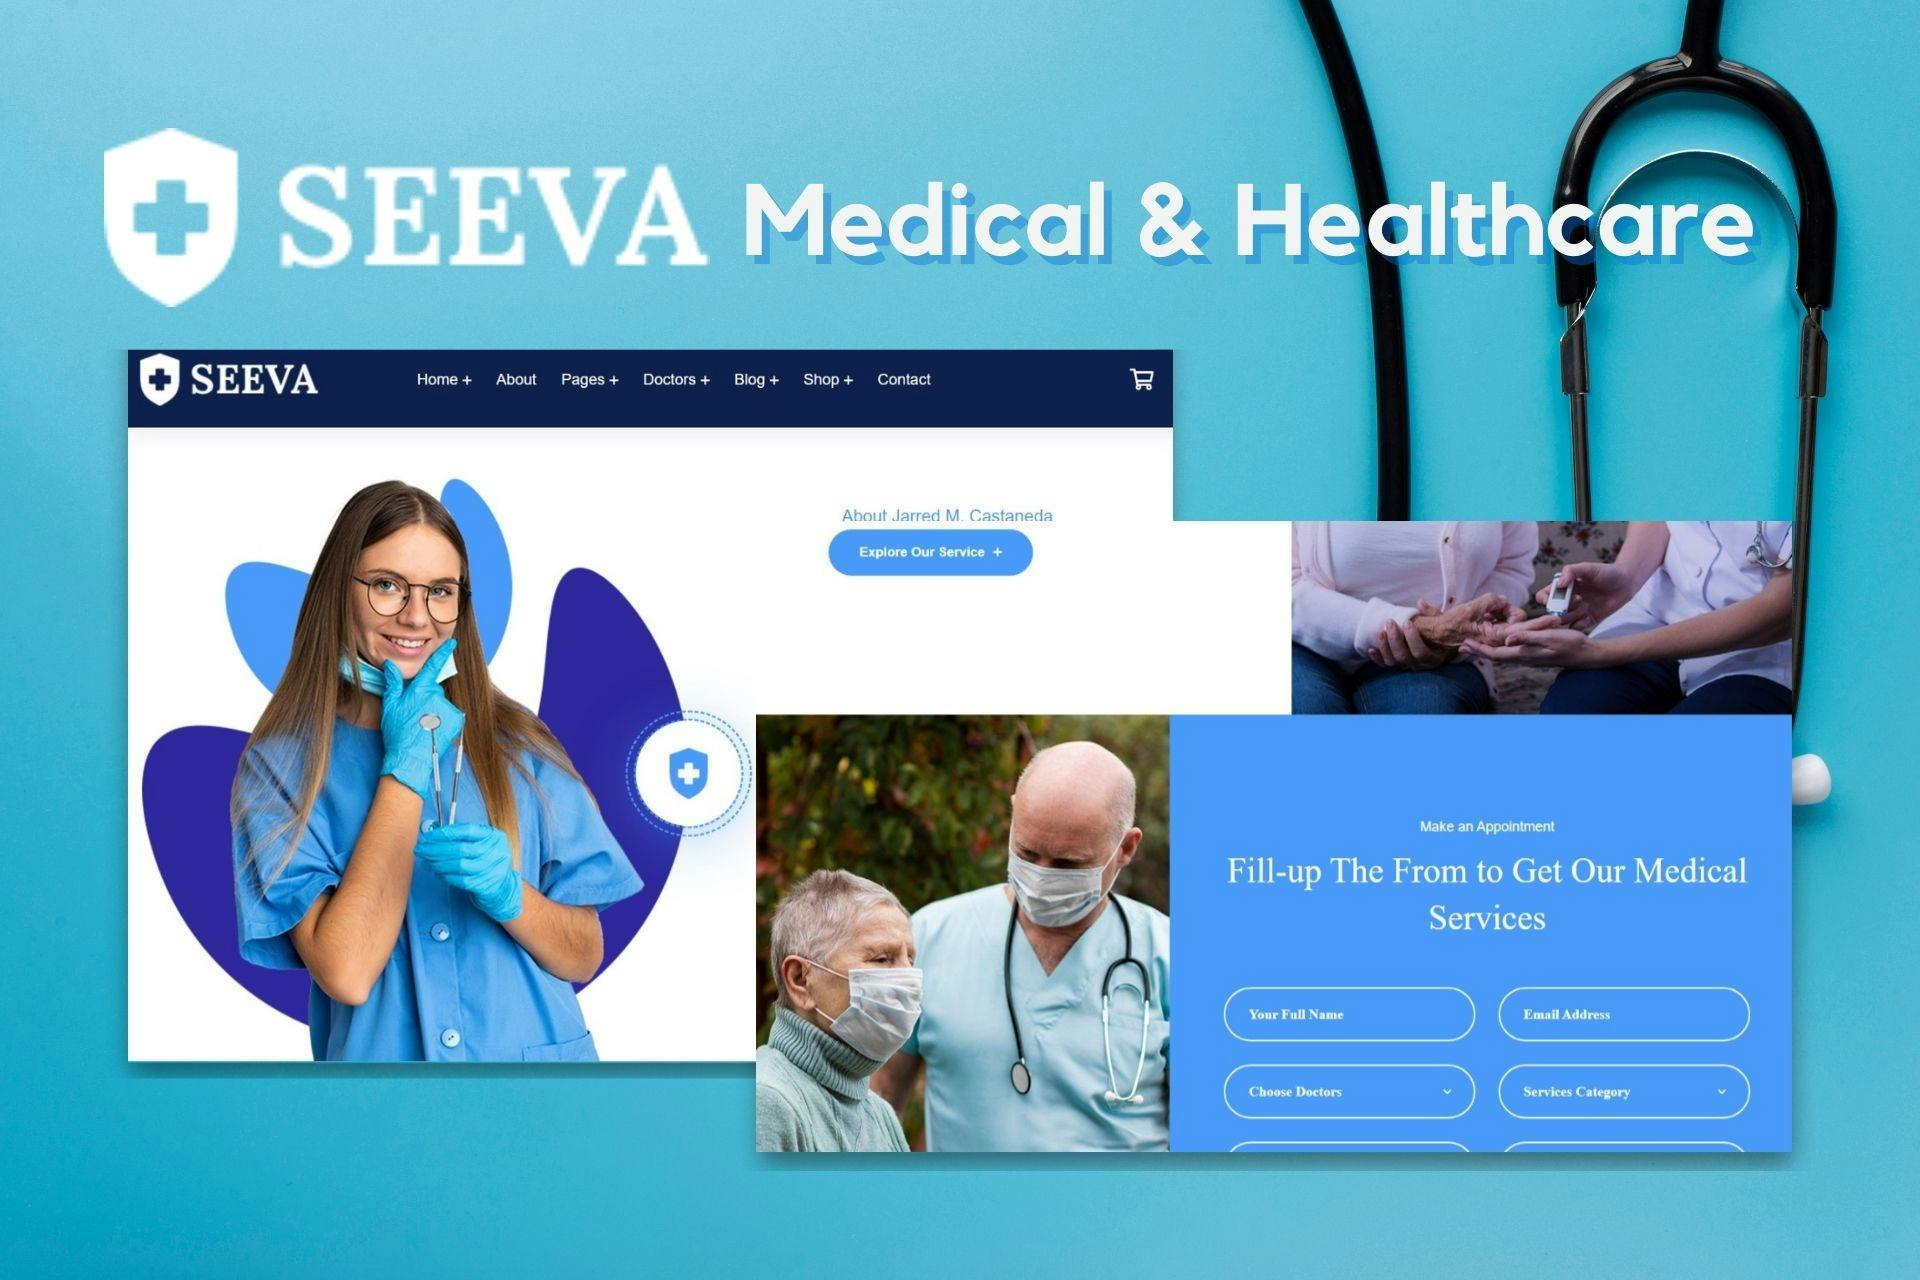 Seeva - Medical & Healthcare Service image